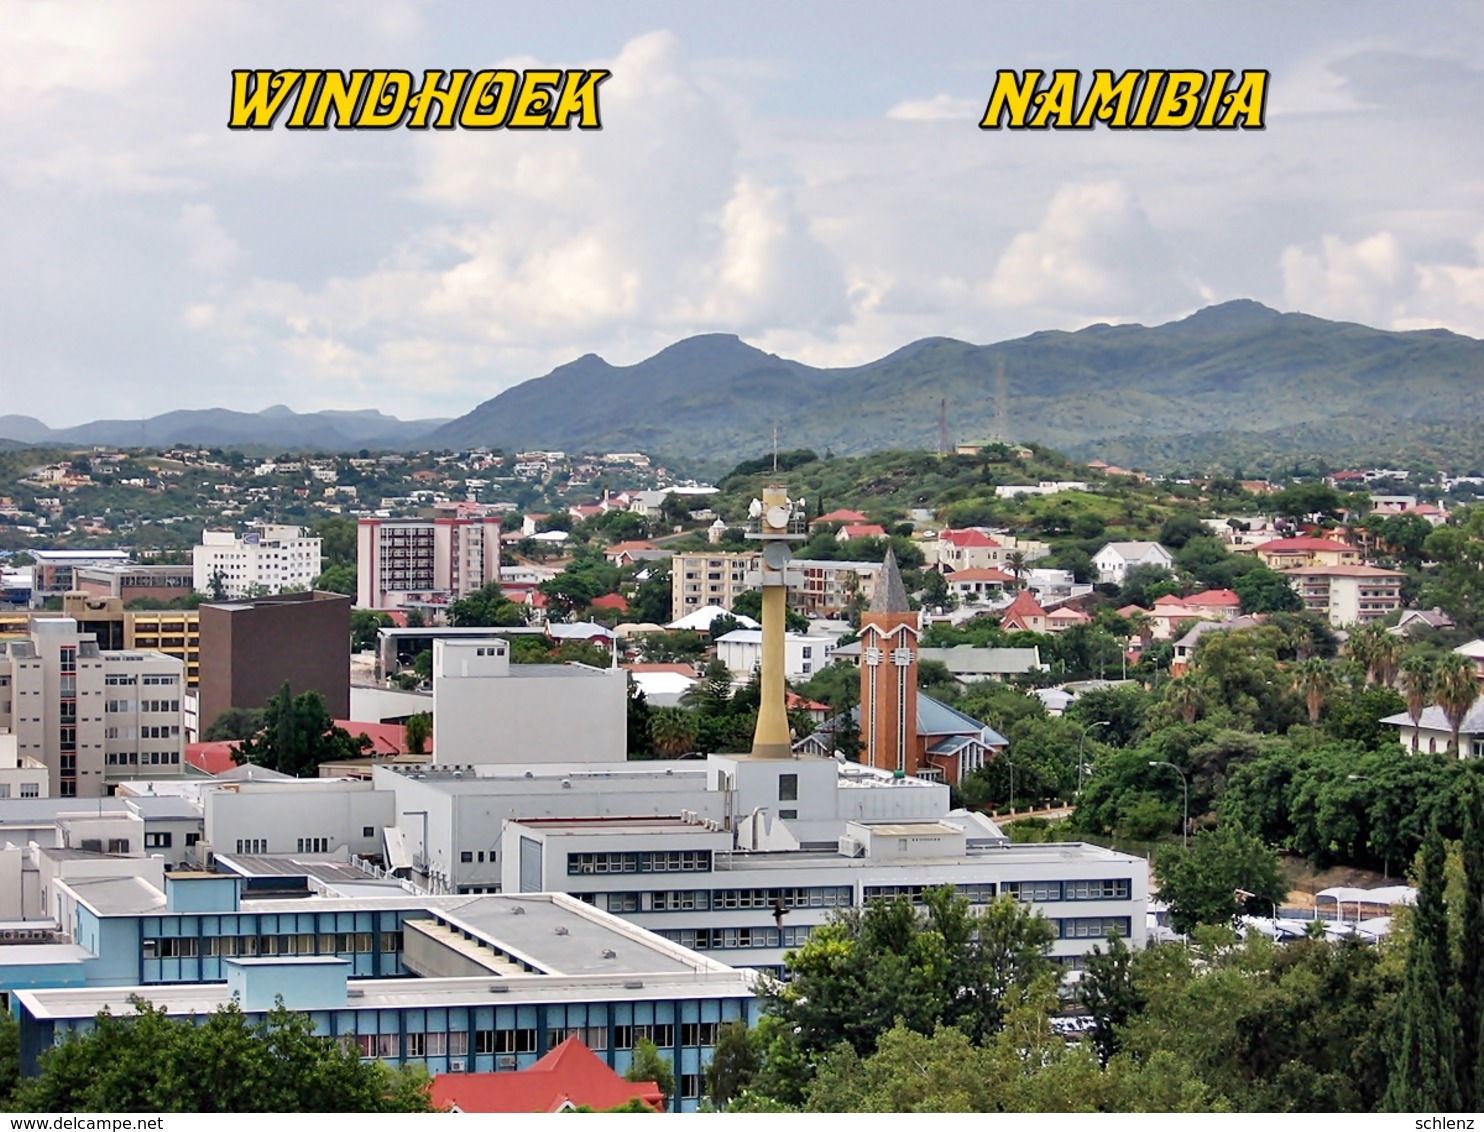 Windhoek Namibia - Namibia